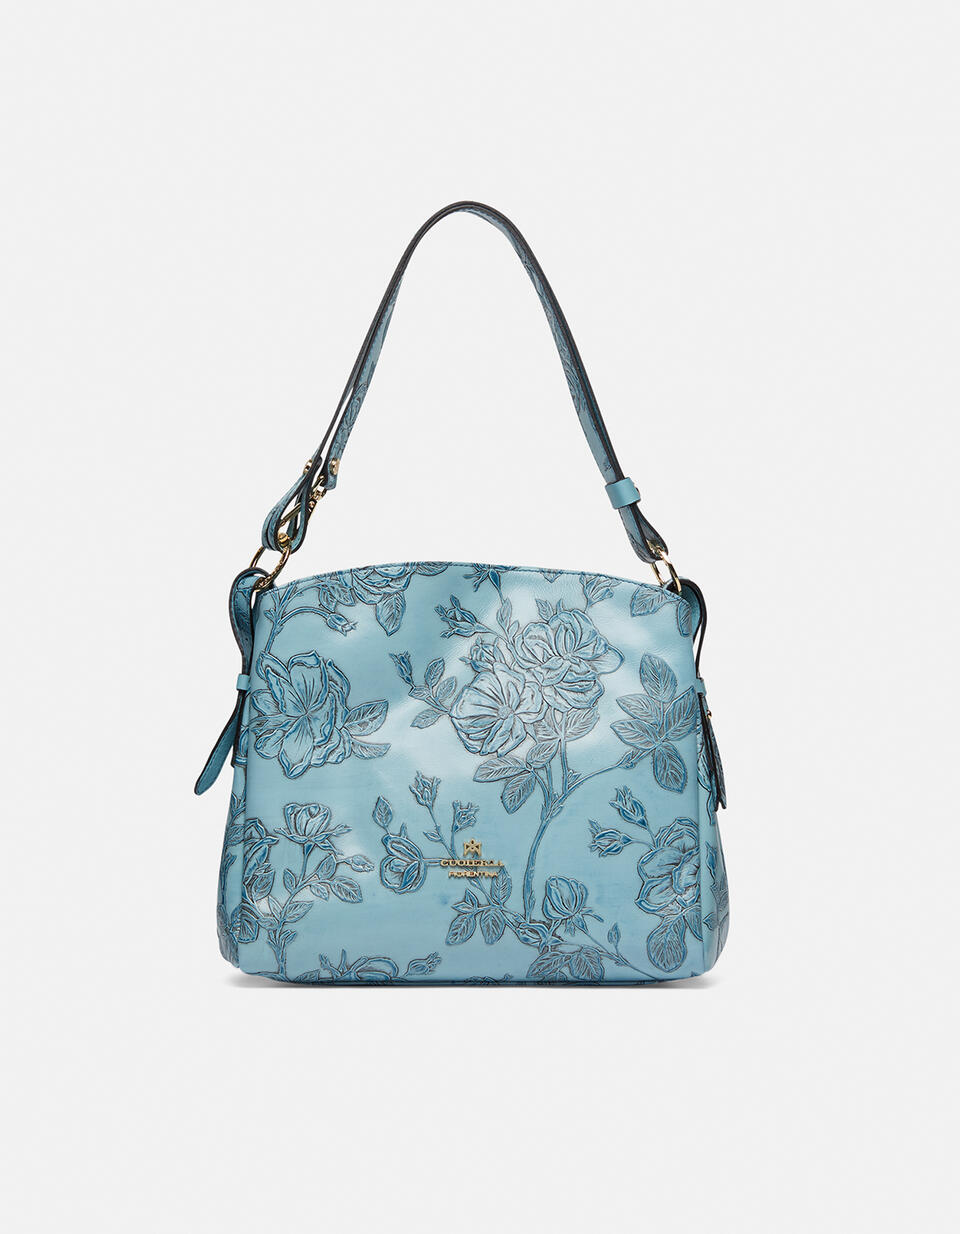 Hobo Light blue  - Shoulder Bags - Women's Bags - Bags - Cuoieria Fiorentina